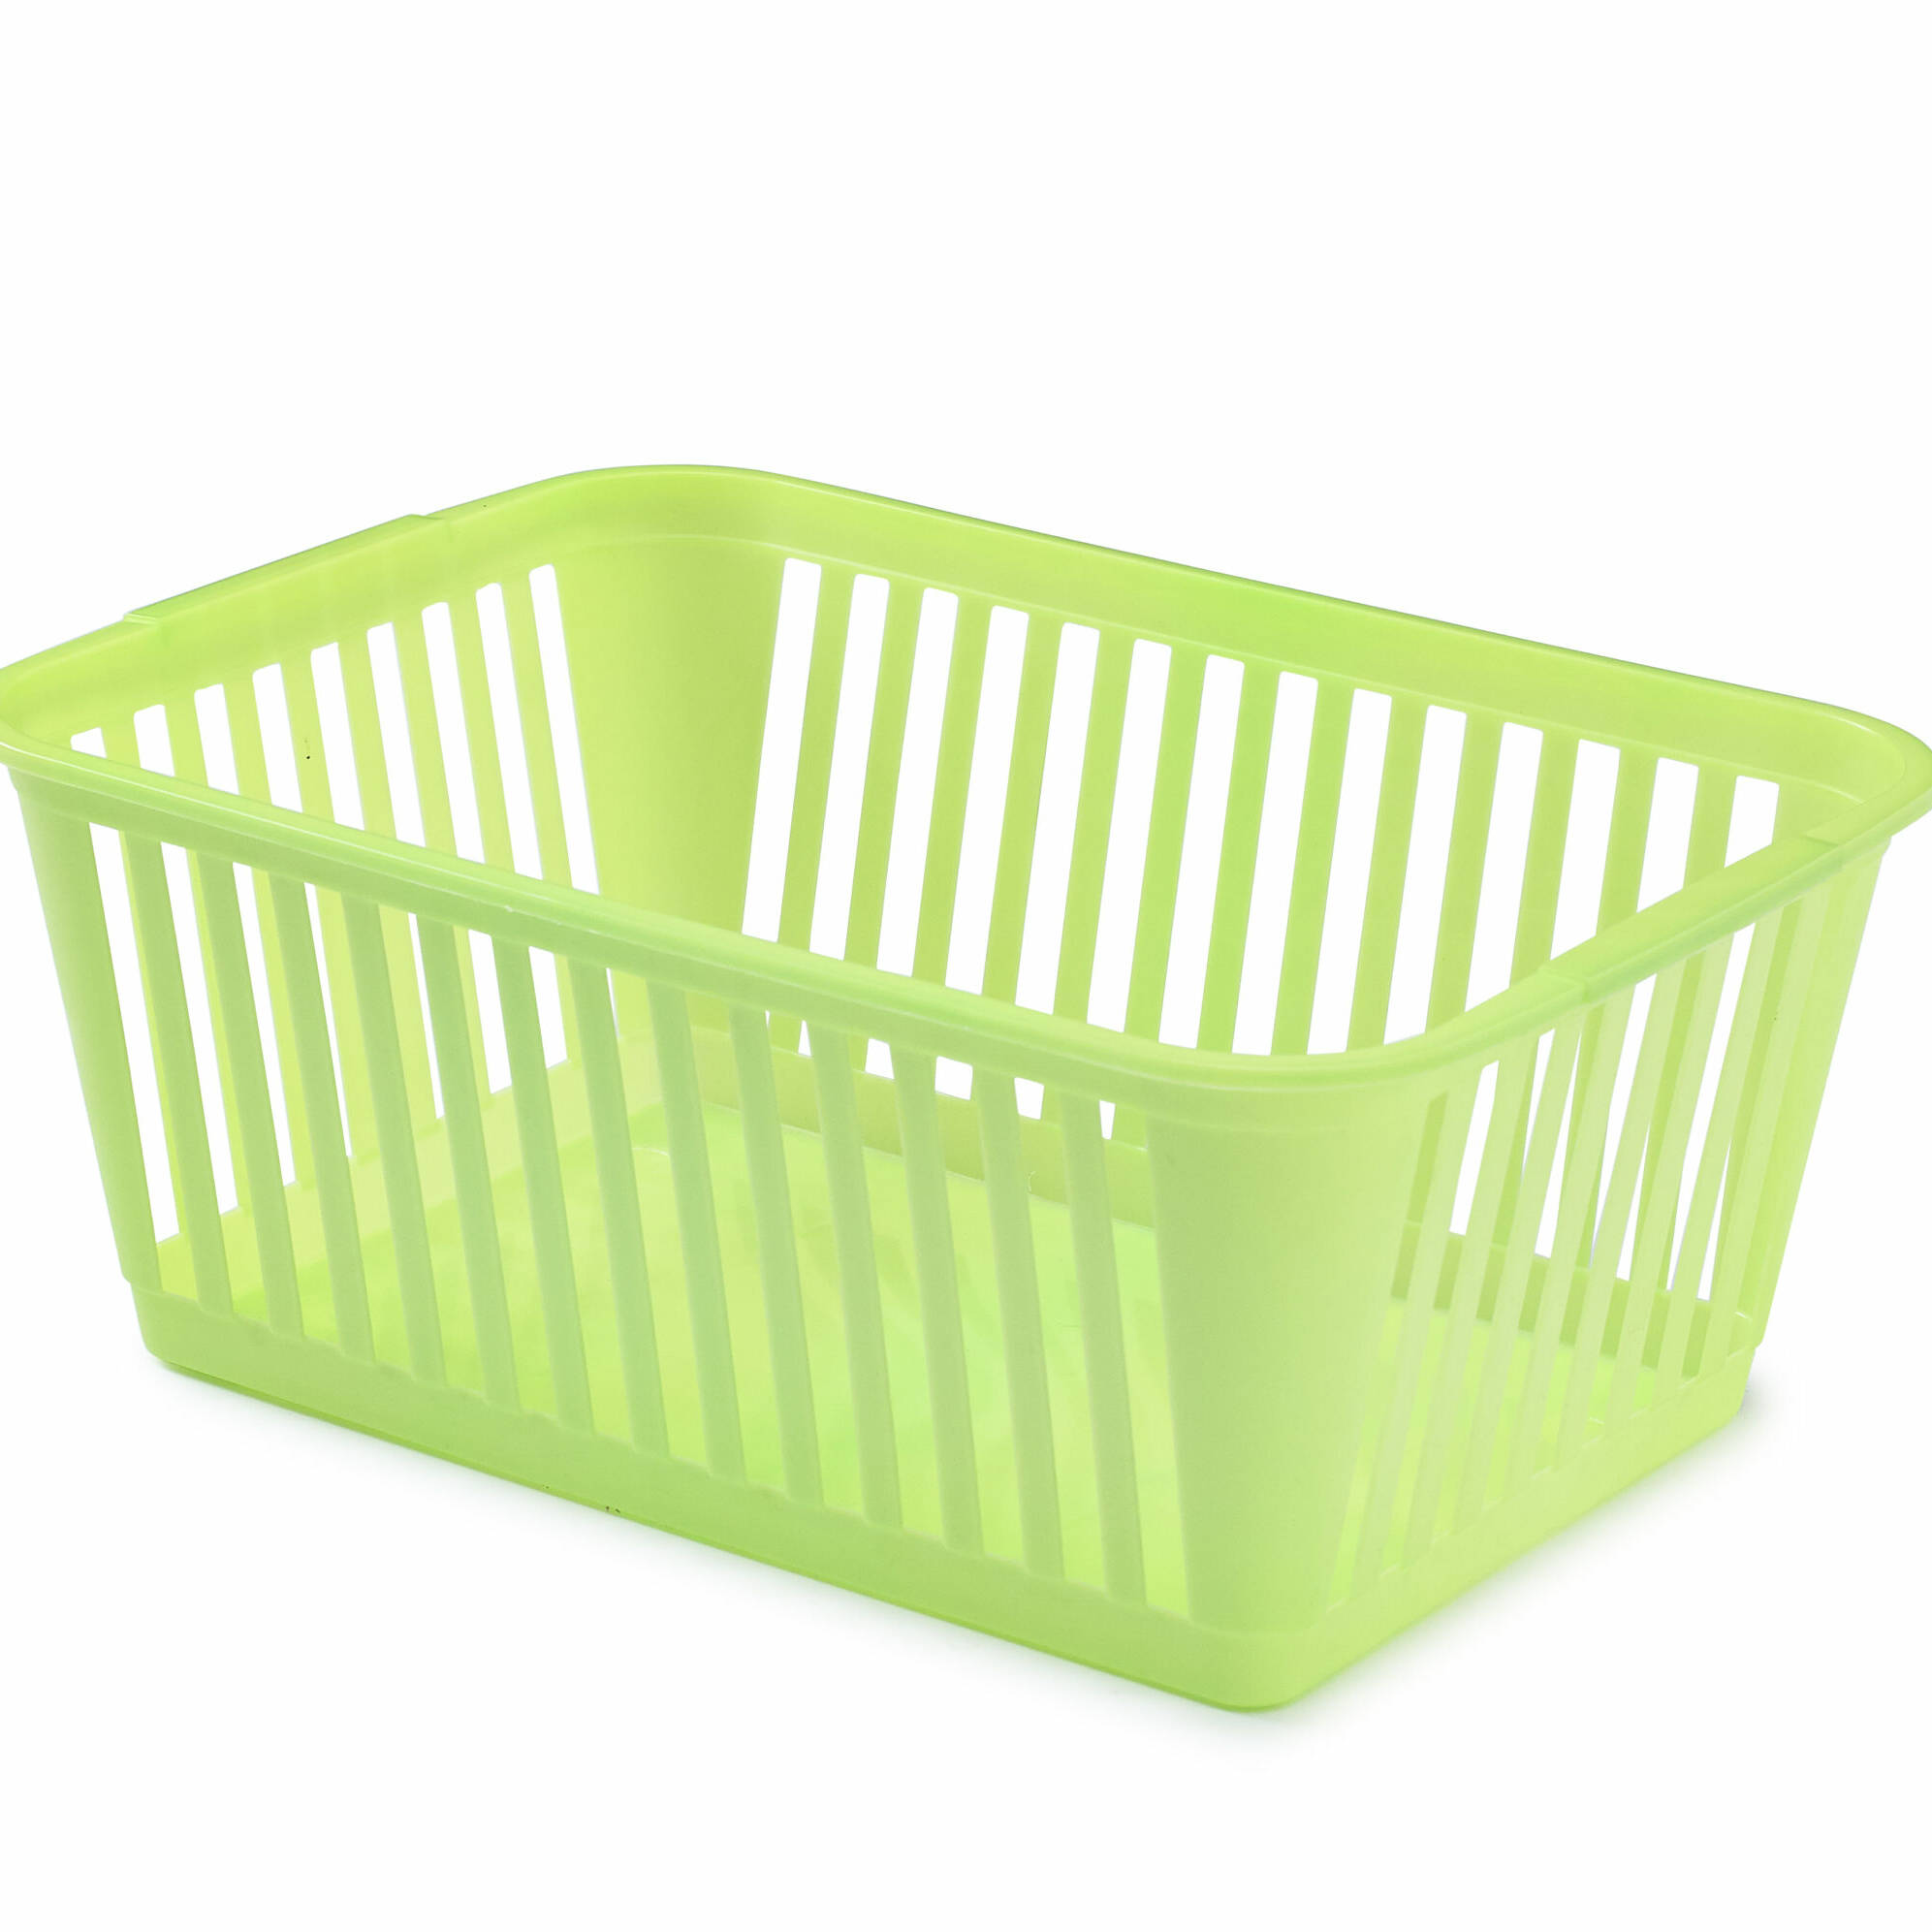 Whitefurze 37cm Handy Basket Lime Green